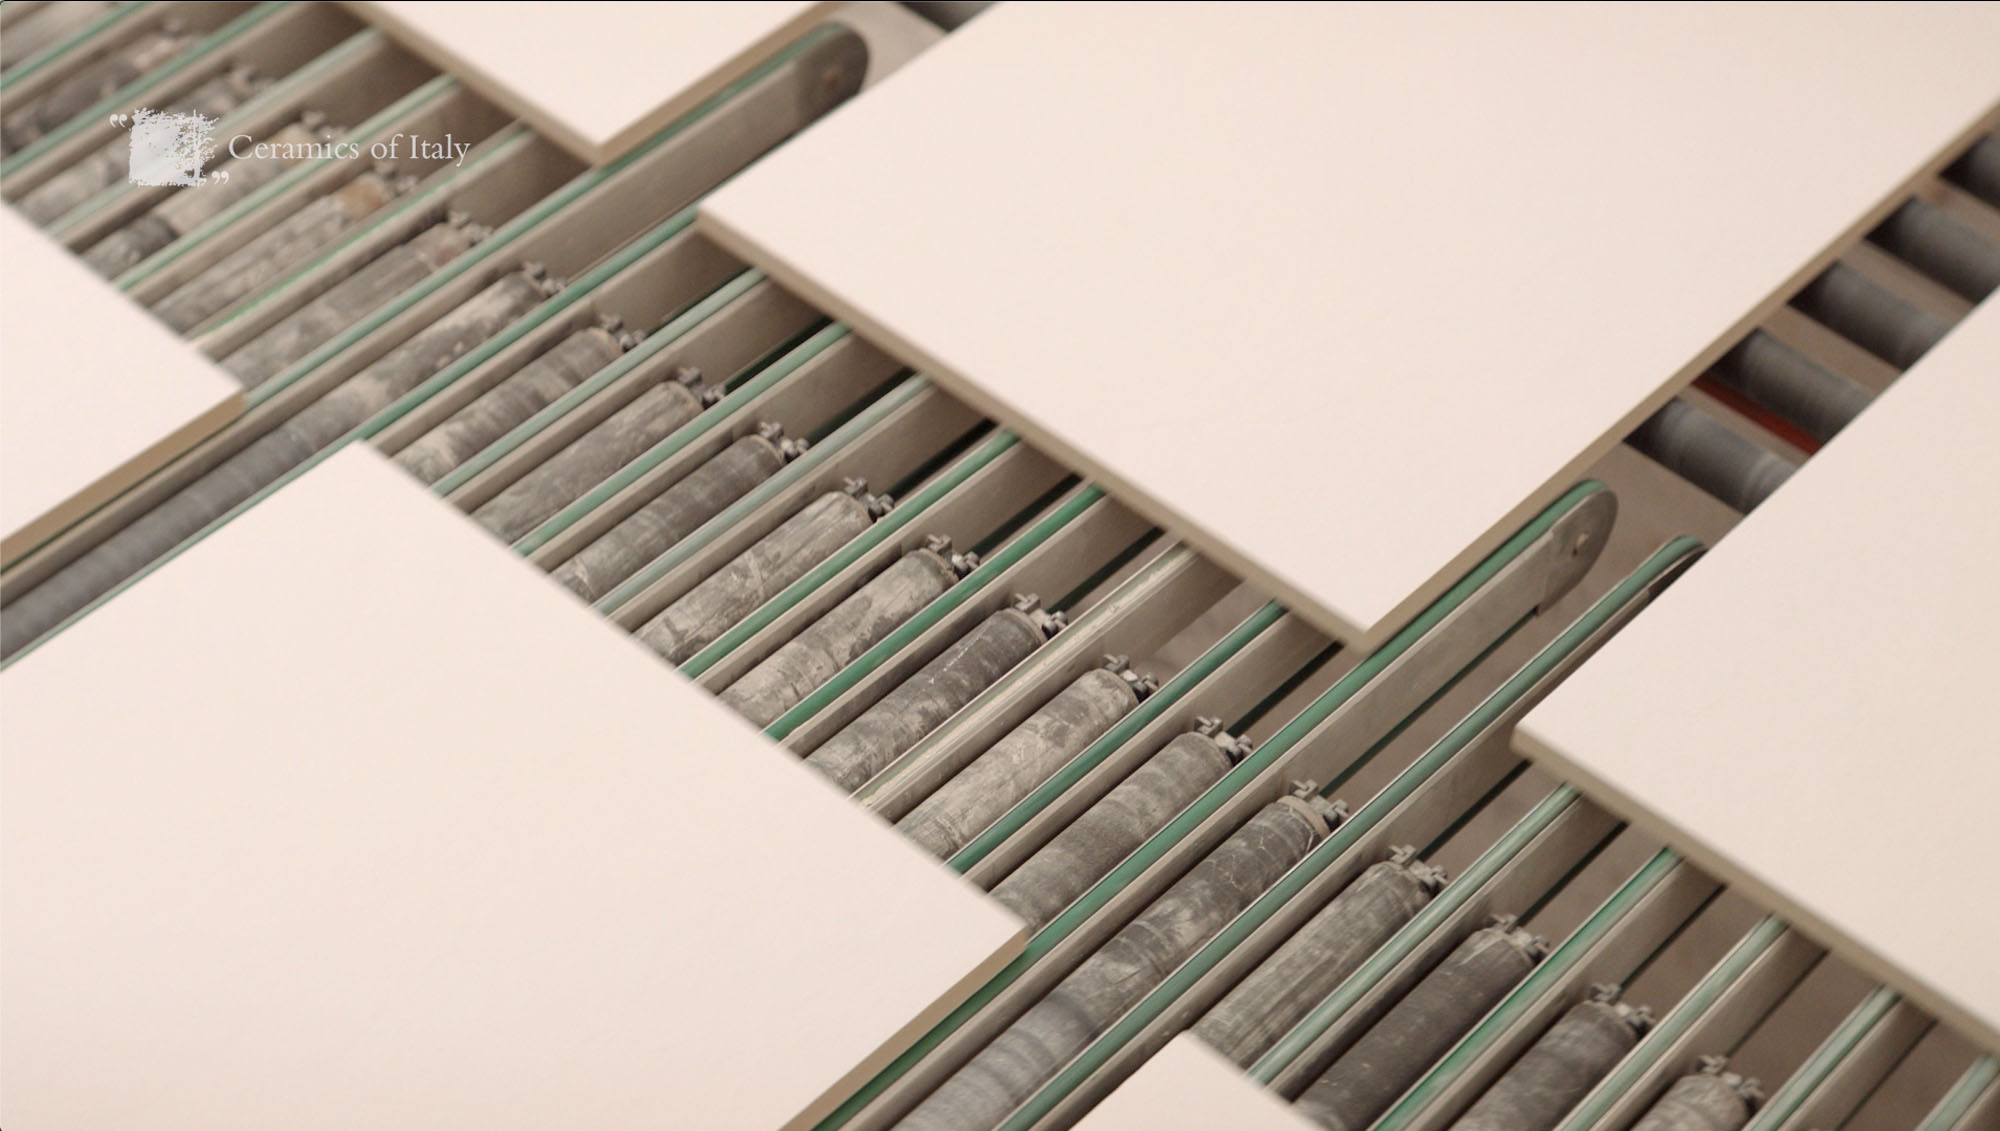 Unfinished rectangular tiles on a conveyor belt.